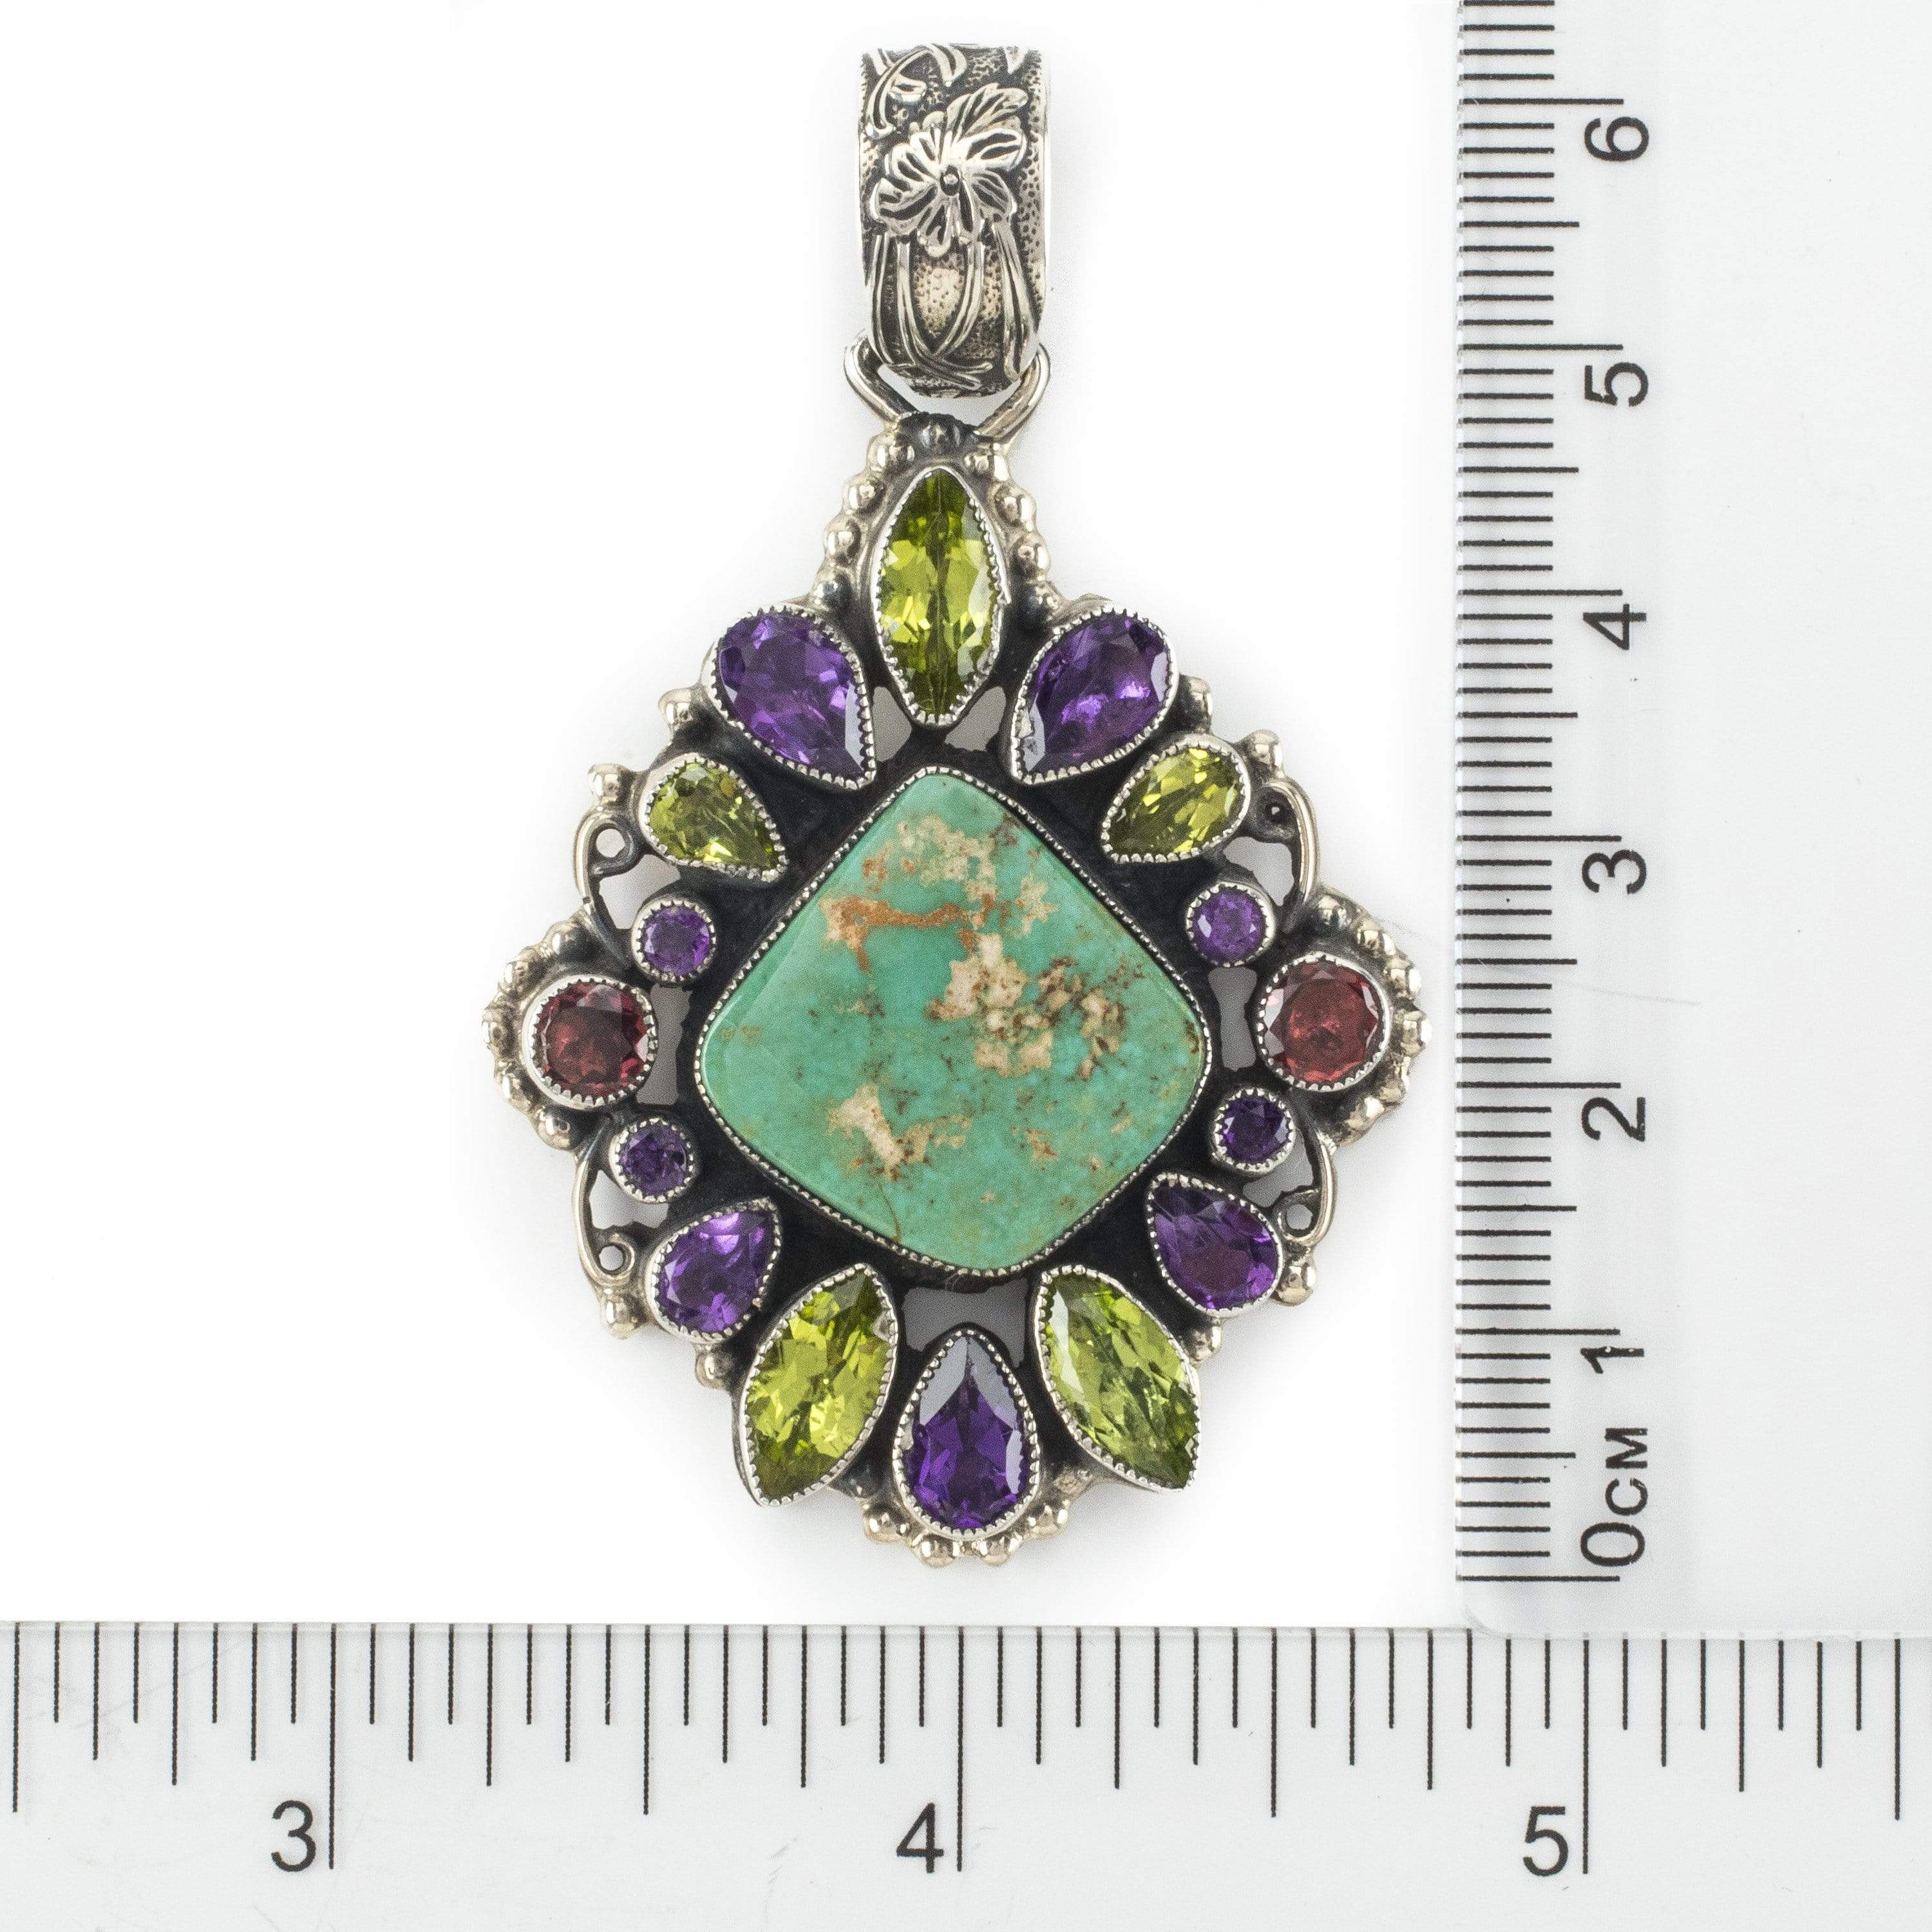 Kalifano Native American Jewelry Leo Feeney Royston Turquoise, Amethyst, and Peridot USA Native American Made 925 Sterling Silver Pendant NAN2400.012